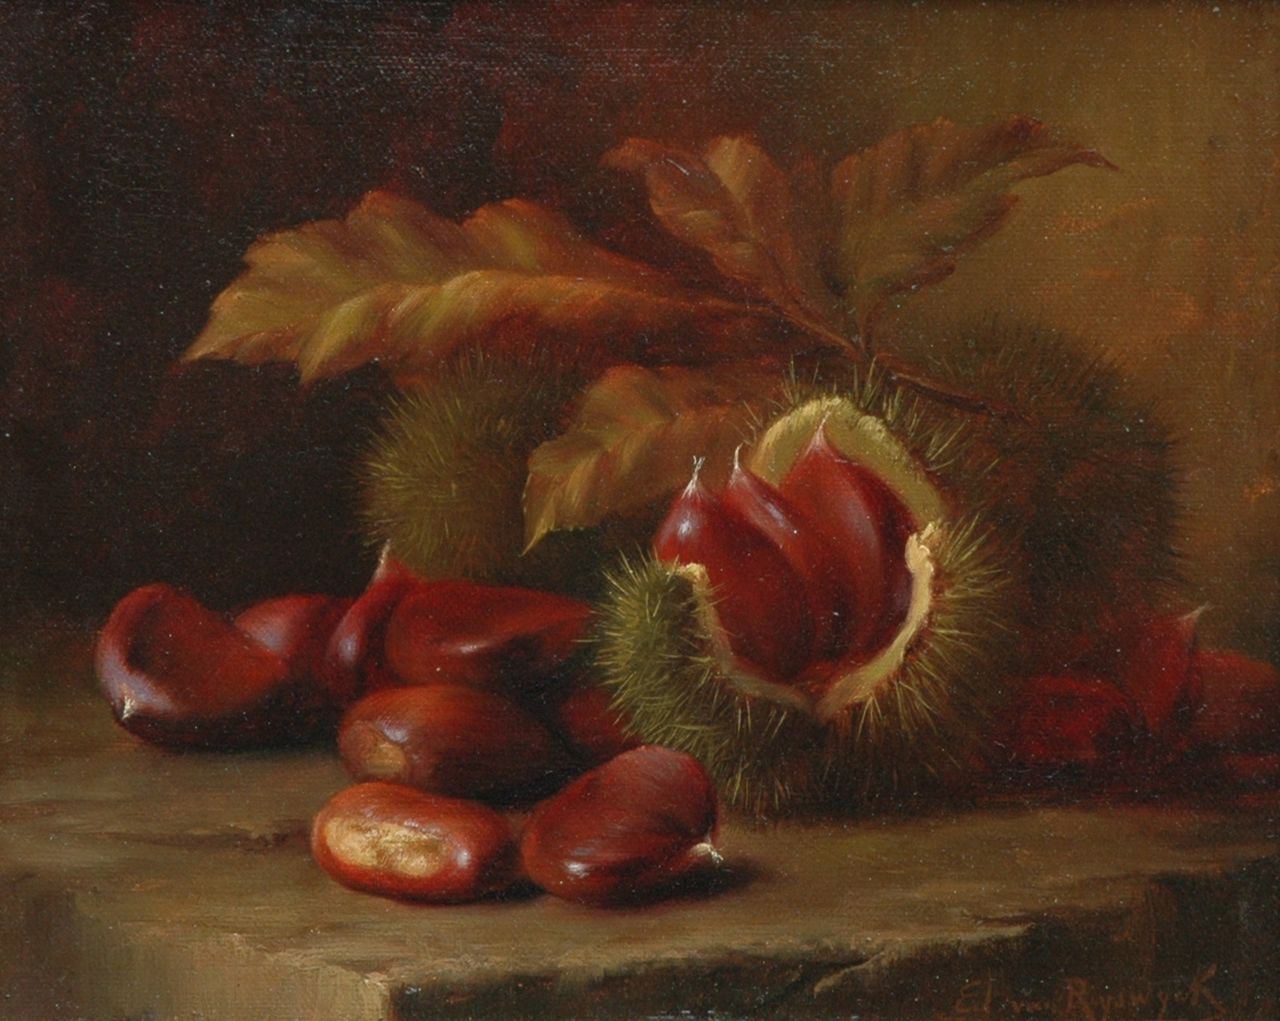 Ryswyck E. van | Edward van Ryswyck, Stilleven met tamme kastanjes, olieverfschets op schildersboard 21,8 x 26,8 cm, gesigneerd rechtsonder